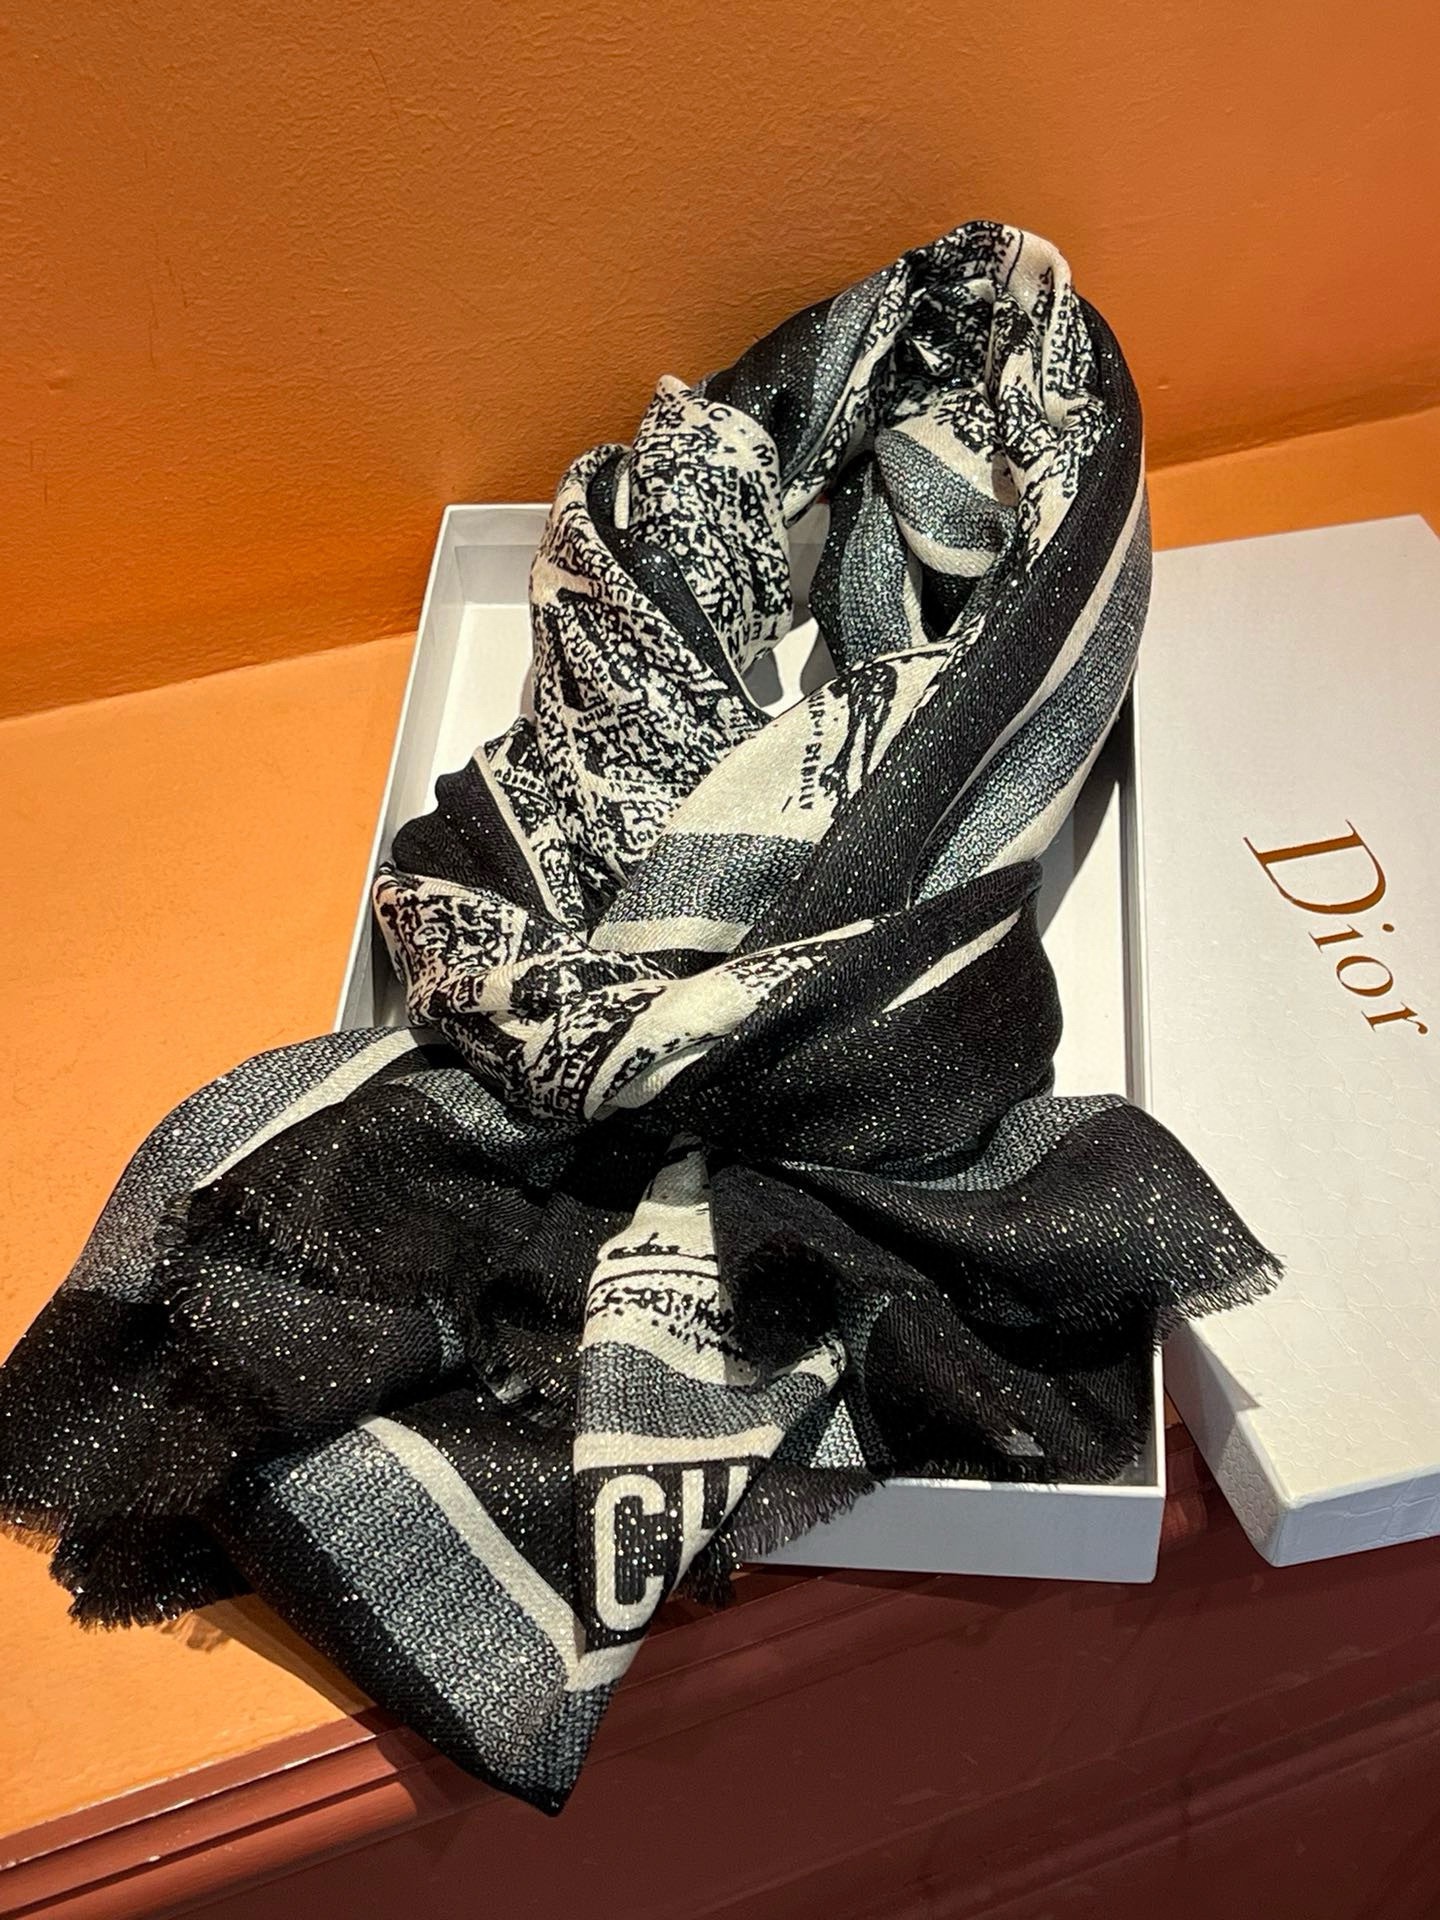 Dior会发光发亮的围巾️巴黎地图银丝长巾PLANDEPARIS巴黎地图这款方巾饰以本季经典的Pland